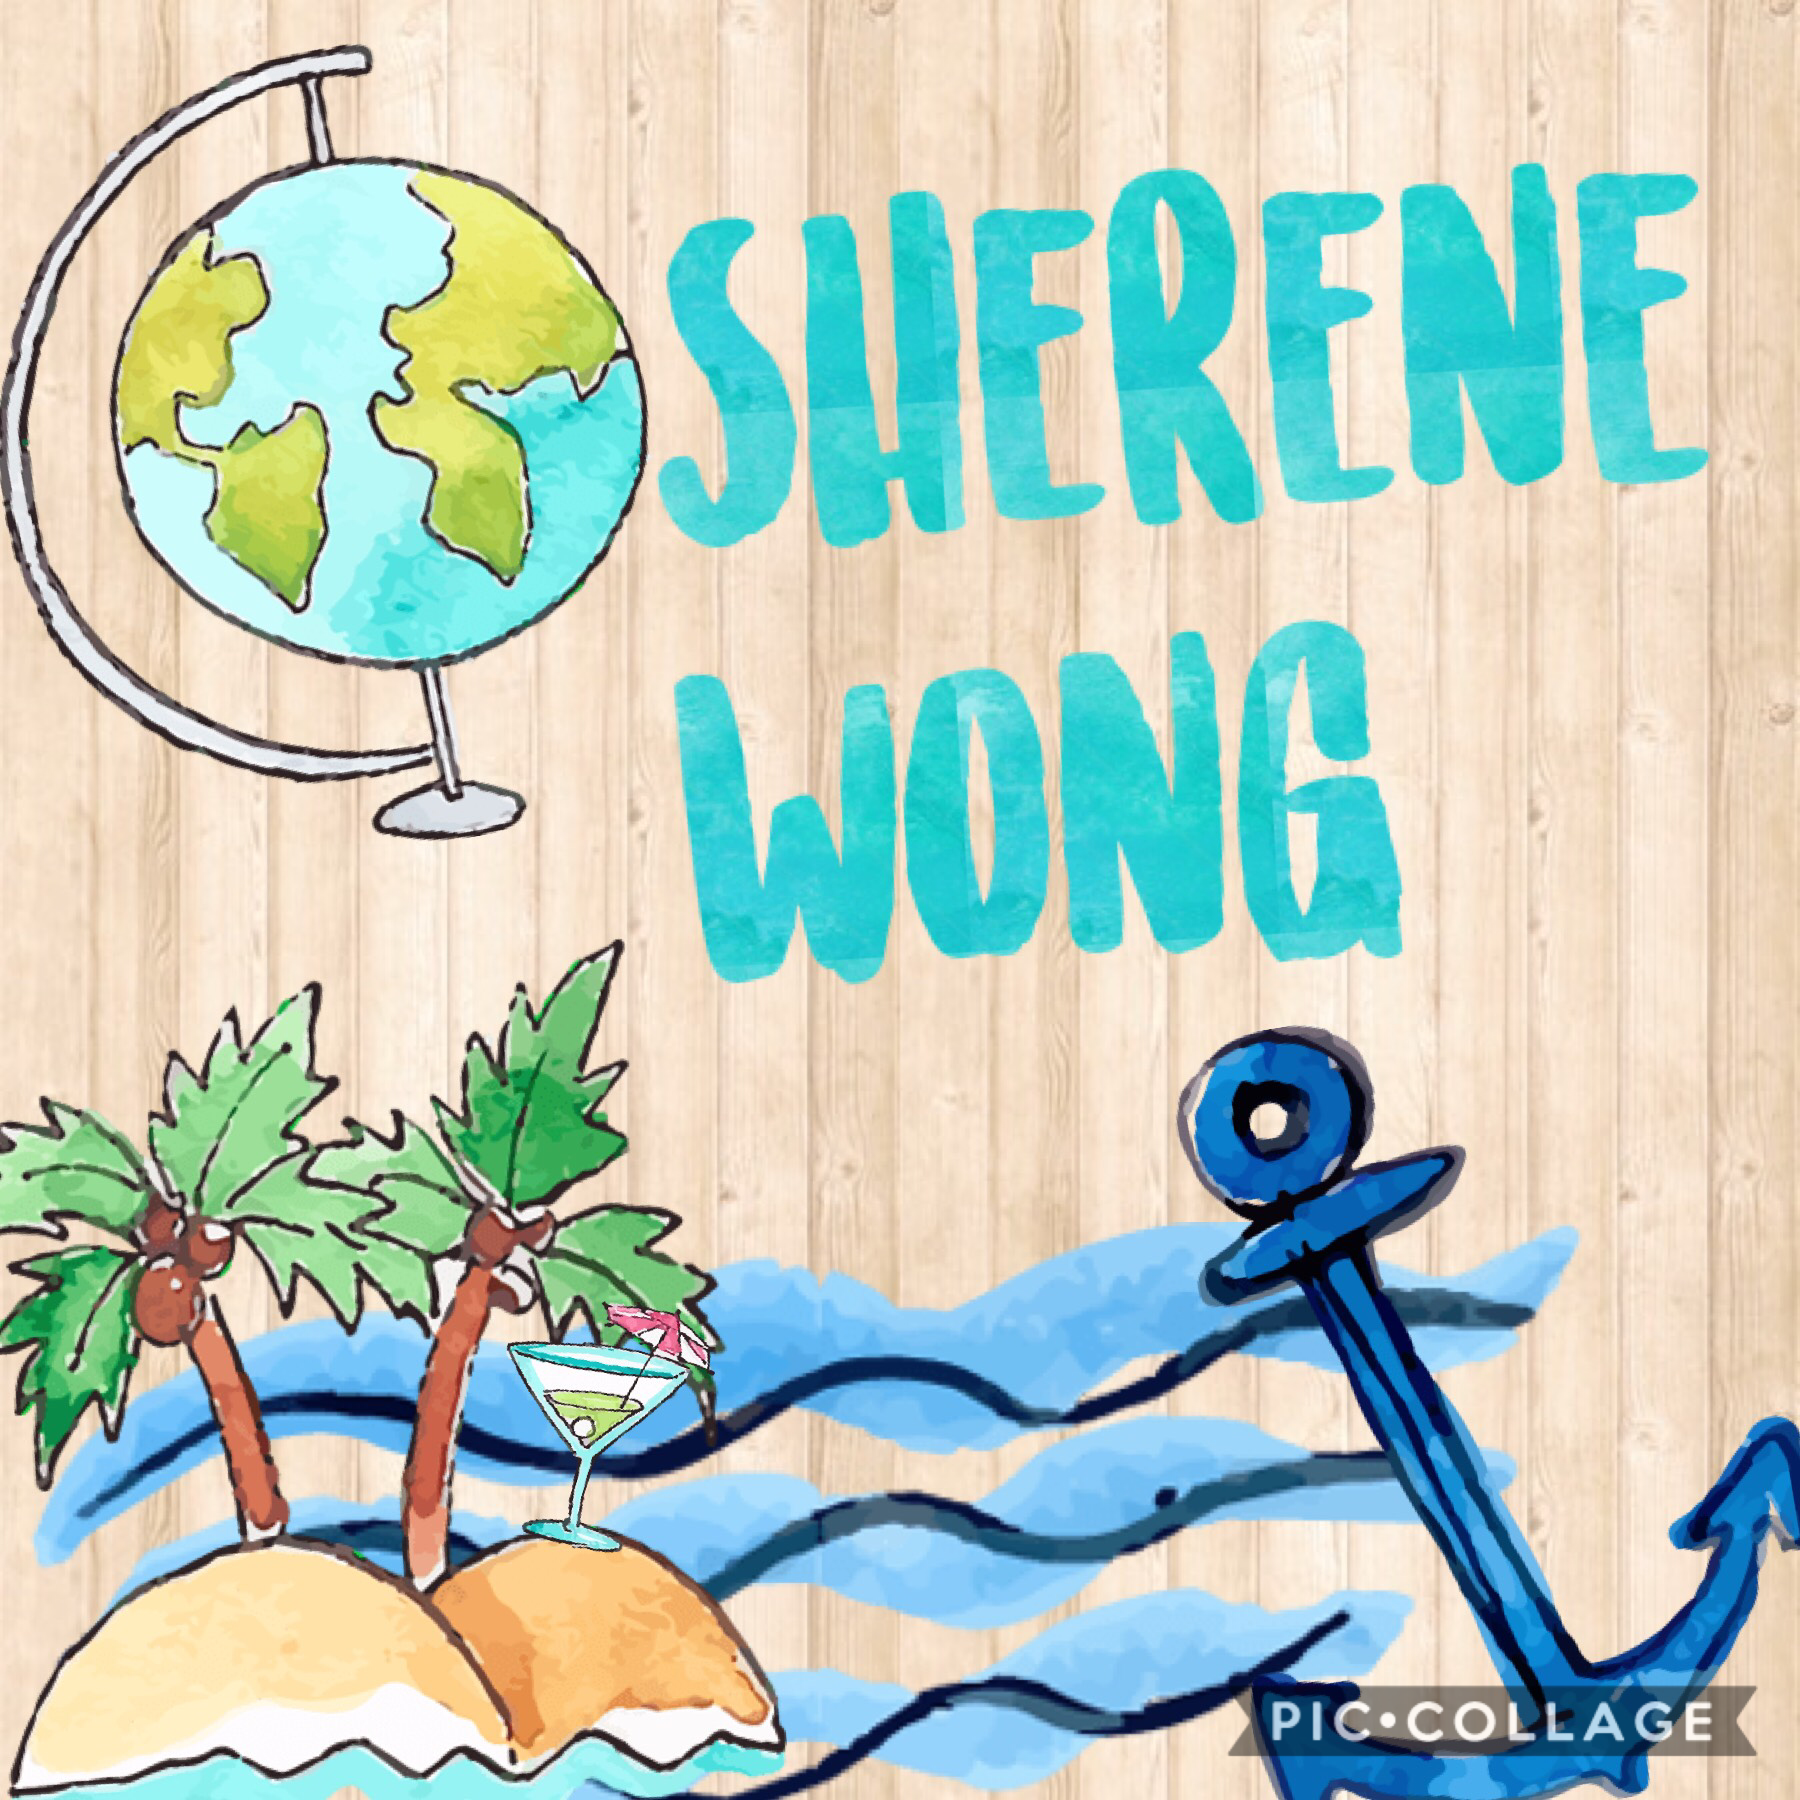 Sherene Wong